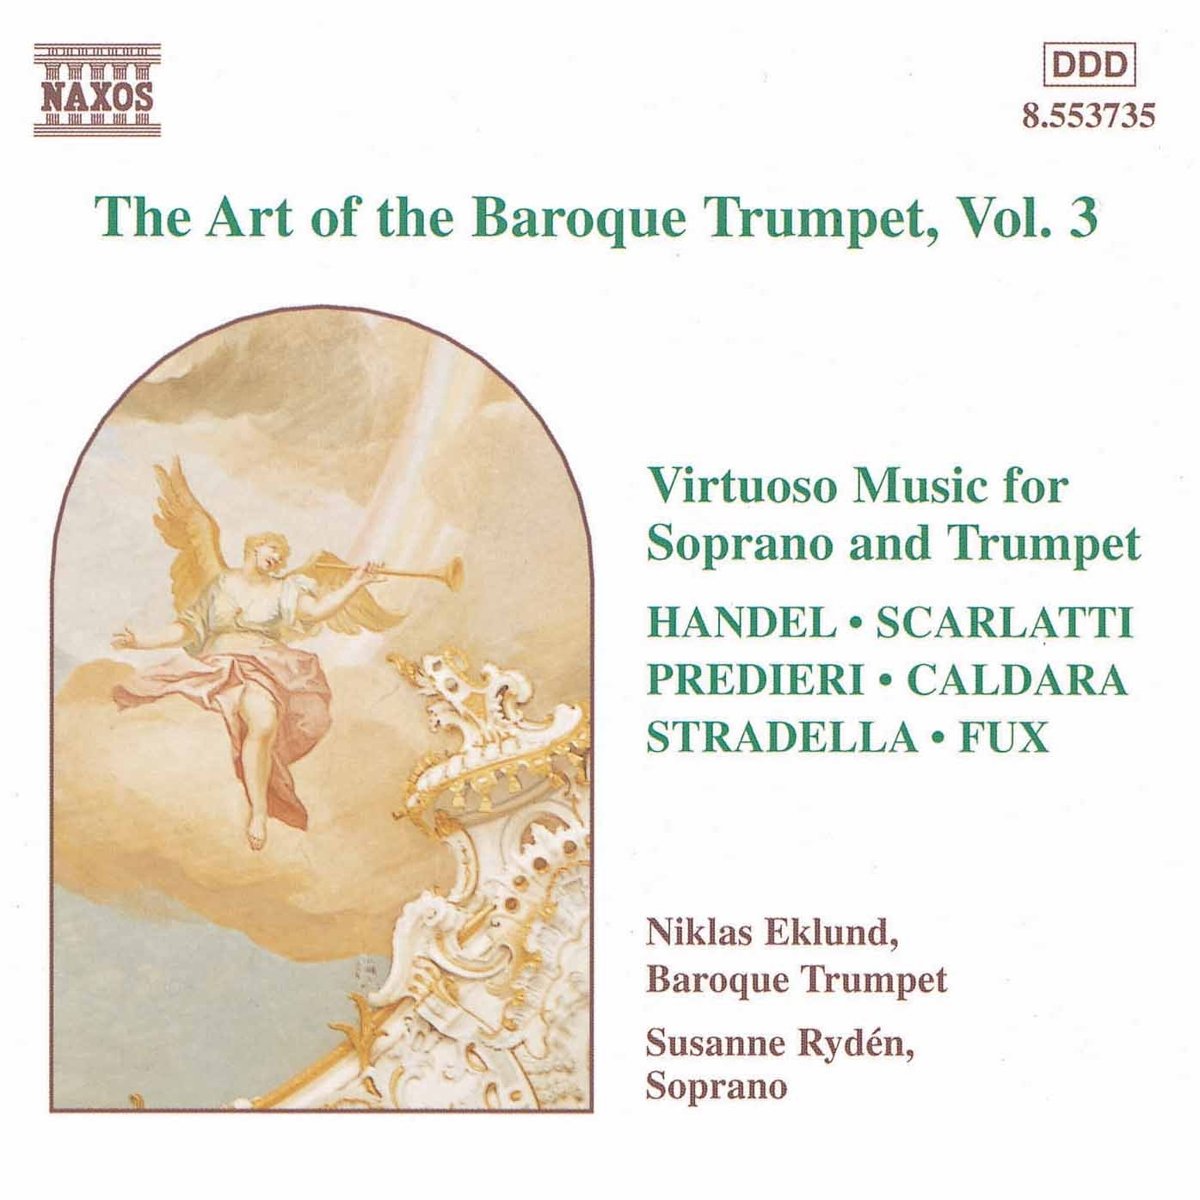 The Art of the Baroque Trumpet Vol. 3